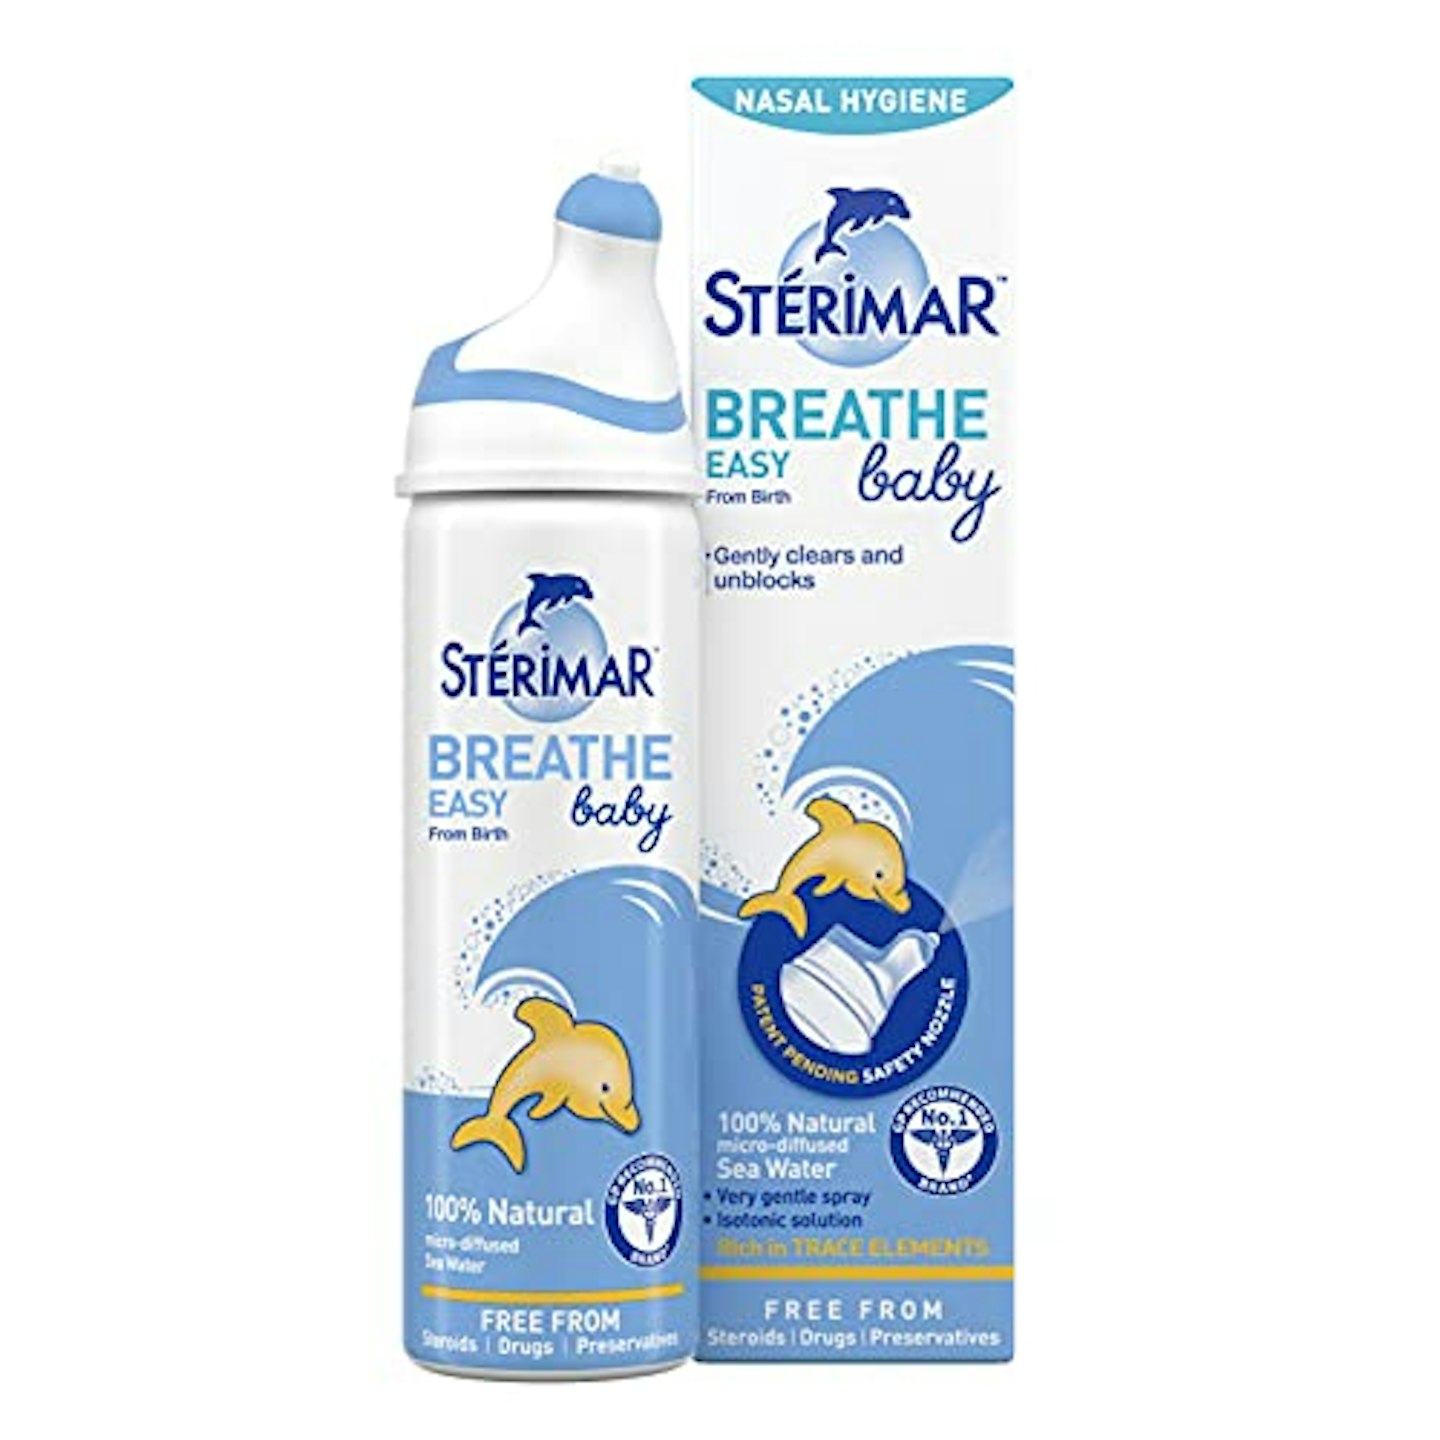 Sterimar Baby Breathe Easy